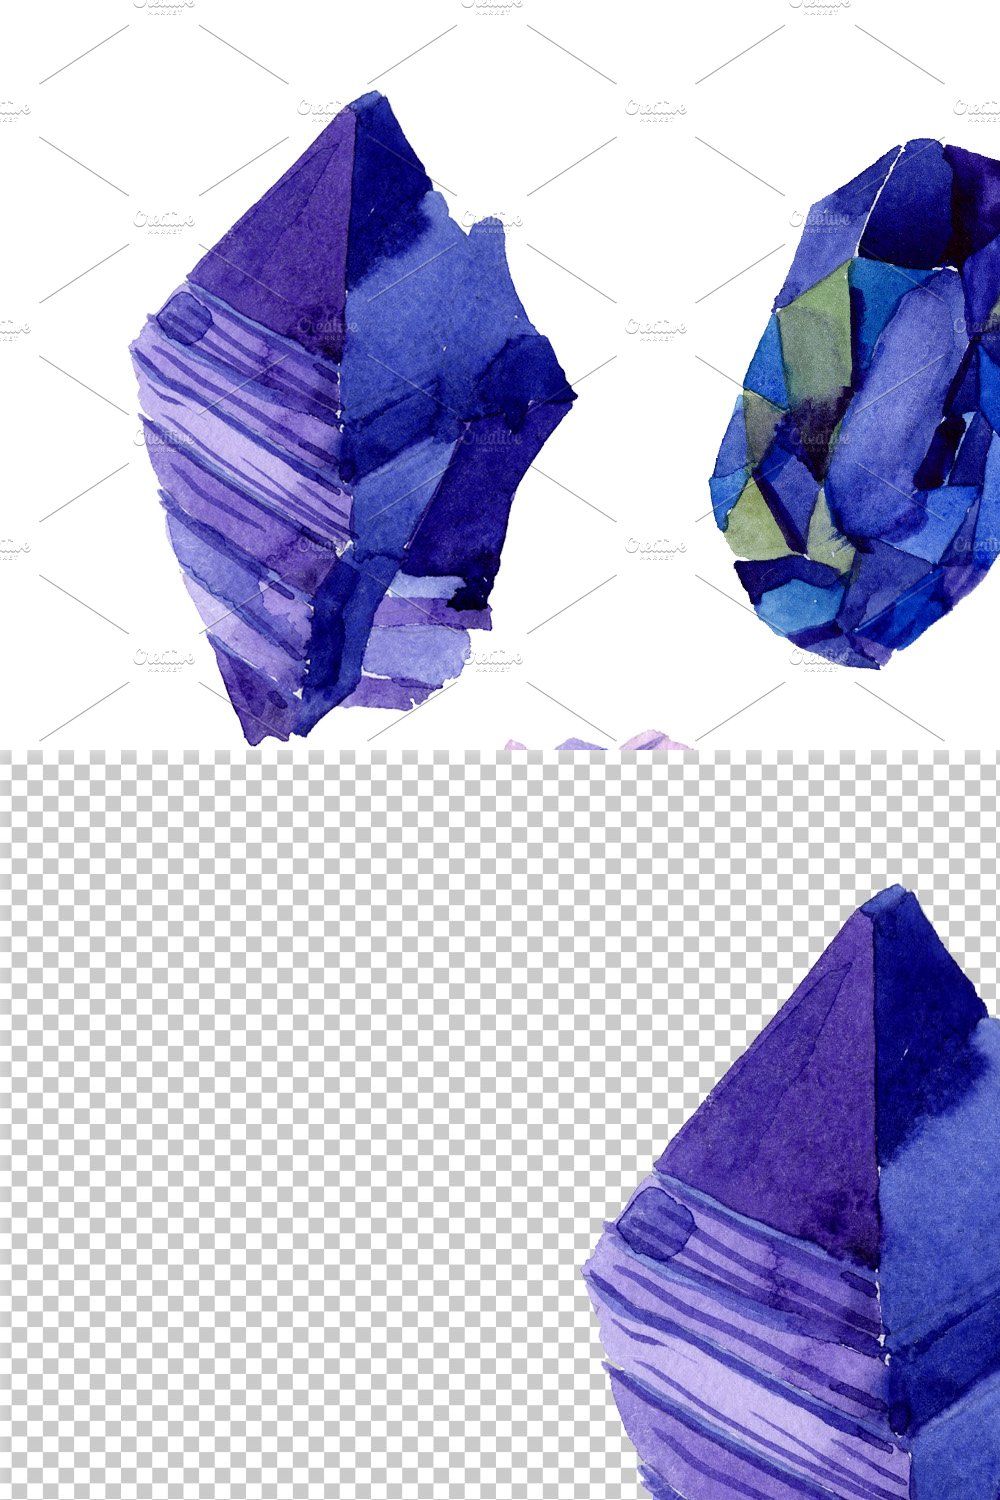 Aquarelle geometric blue crystal PNG pinterest preview image.